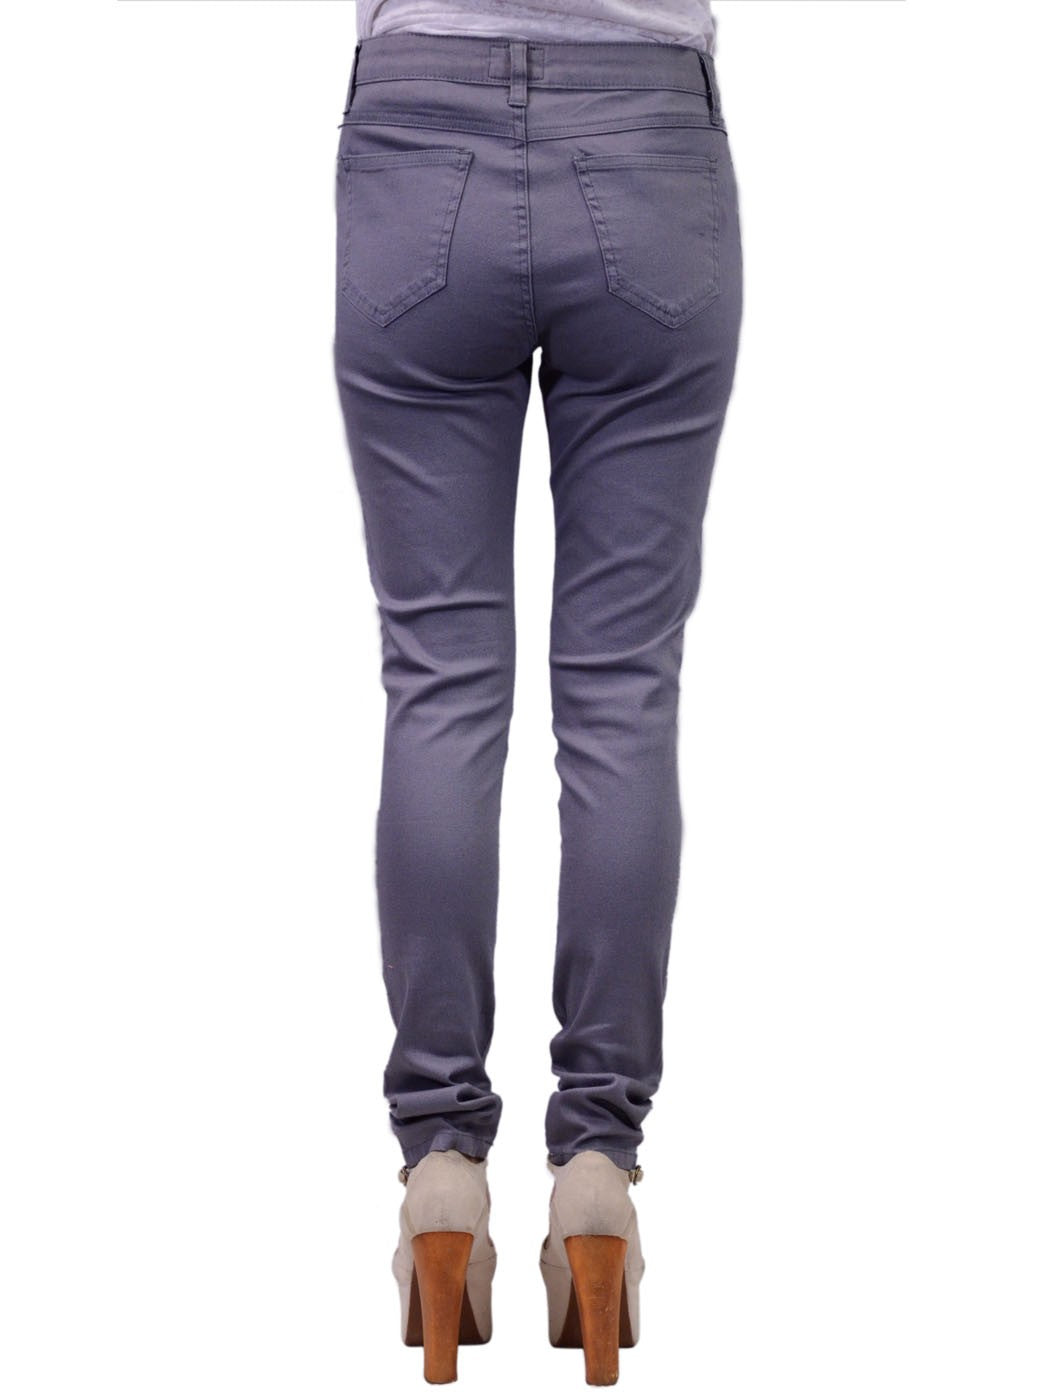 Uniq Urban Trendy Fitted Five Pocket Grey Skinny Jean Casual Pants